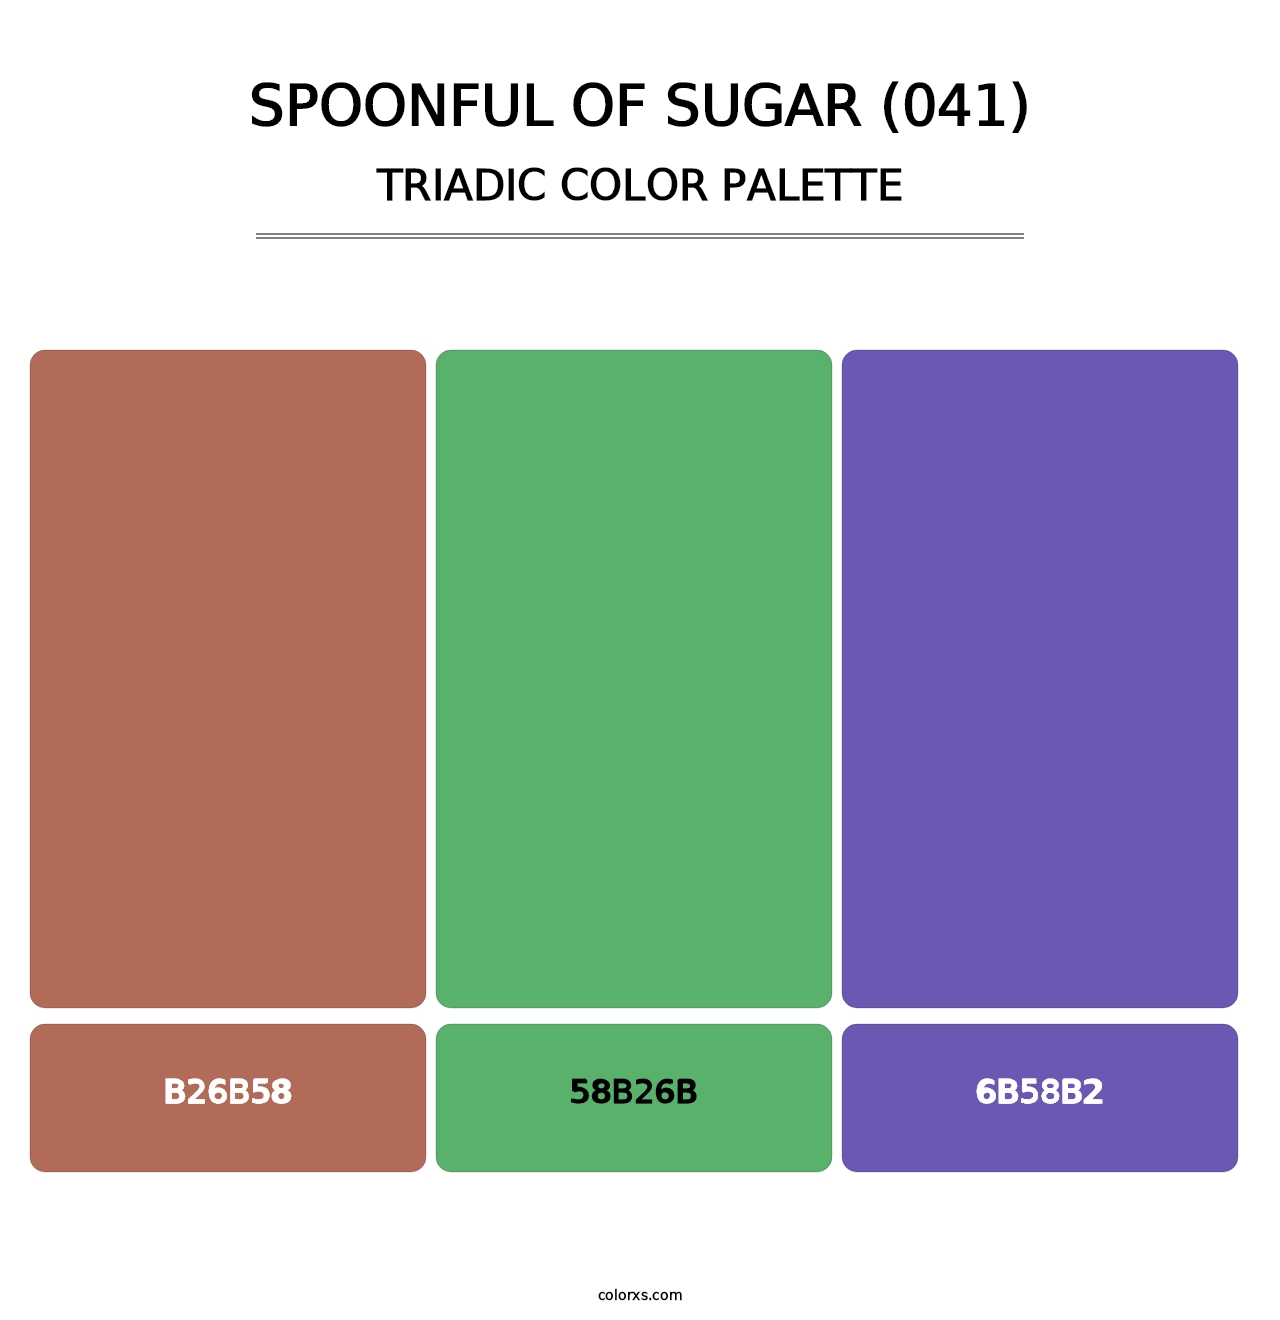 Spoonful of Sugar (041) - Triadic Color Palette